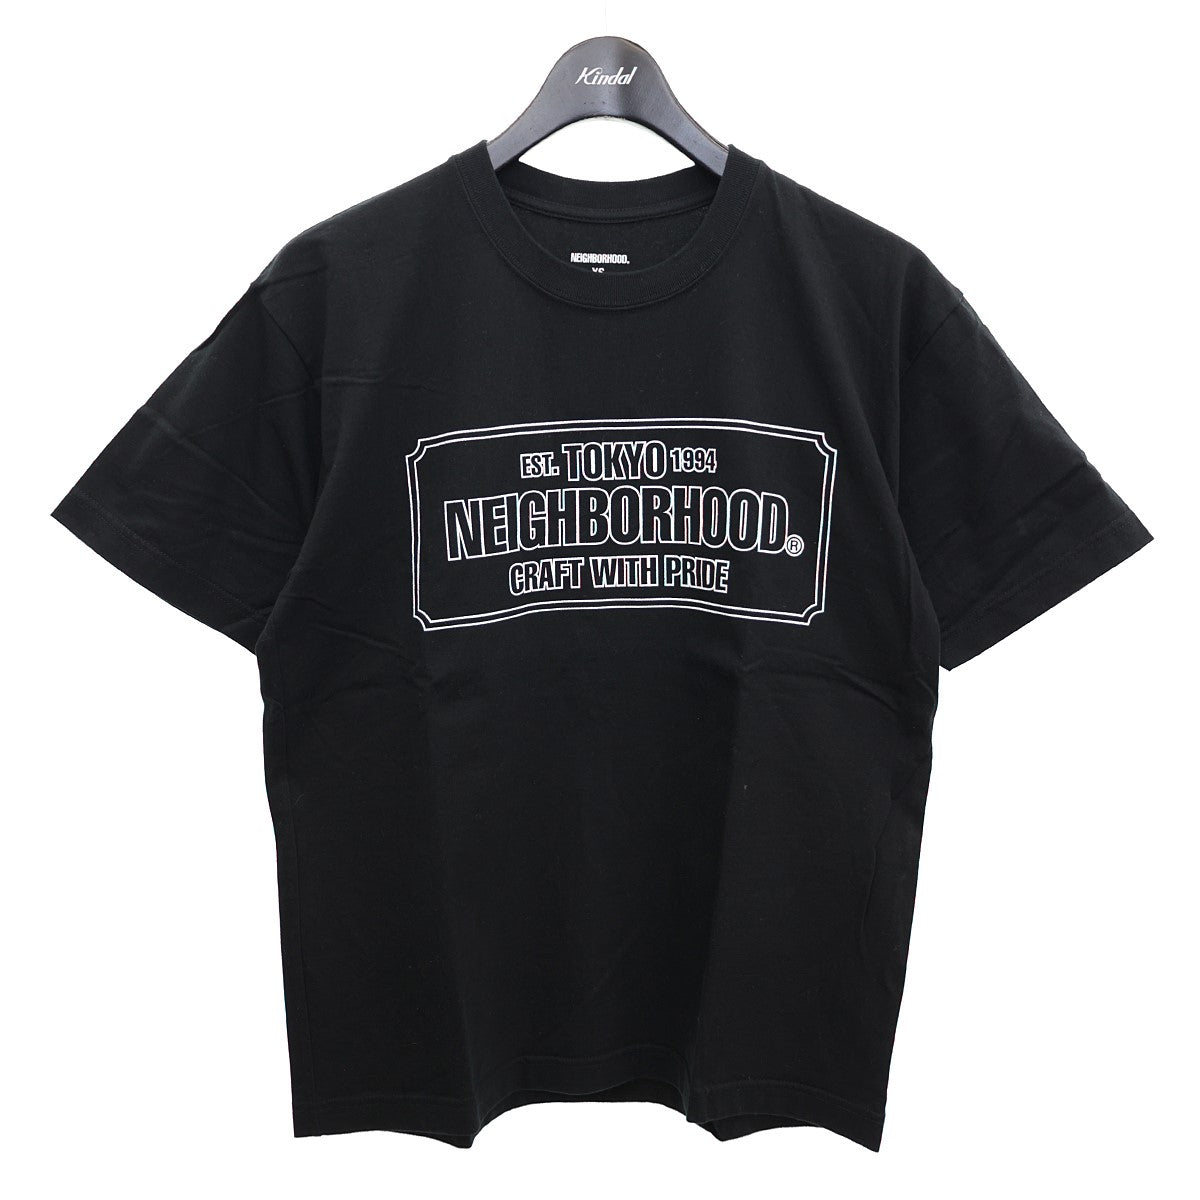 NEIGHBORHOOD(ネイバーフッド) CRAFT WITH PRIDEプリントTシャツ ...